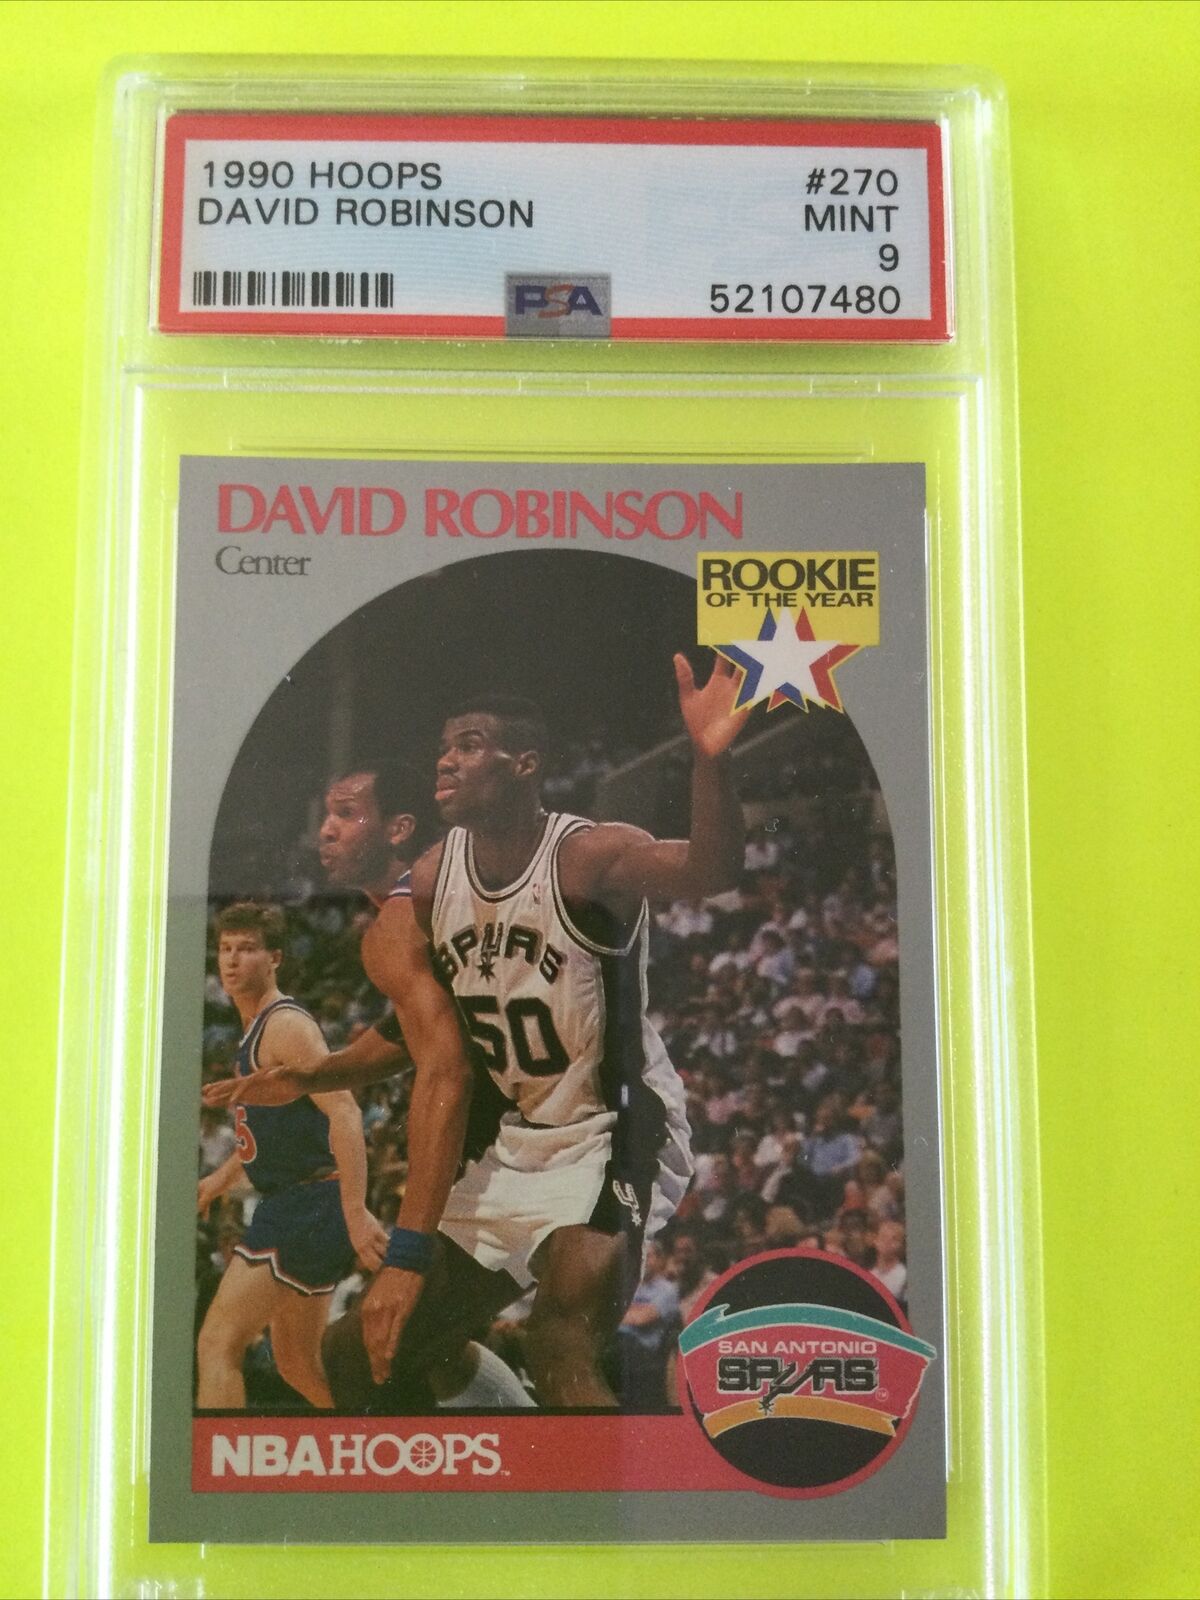 David Robinson rookie card